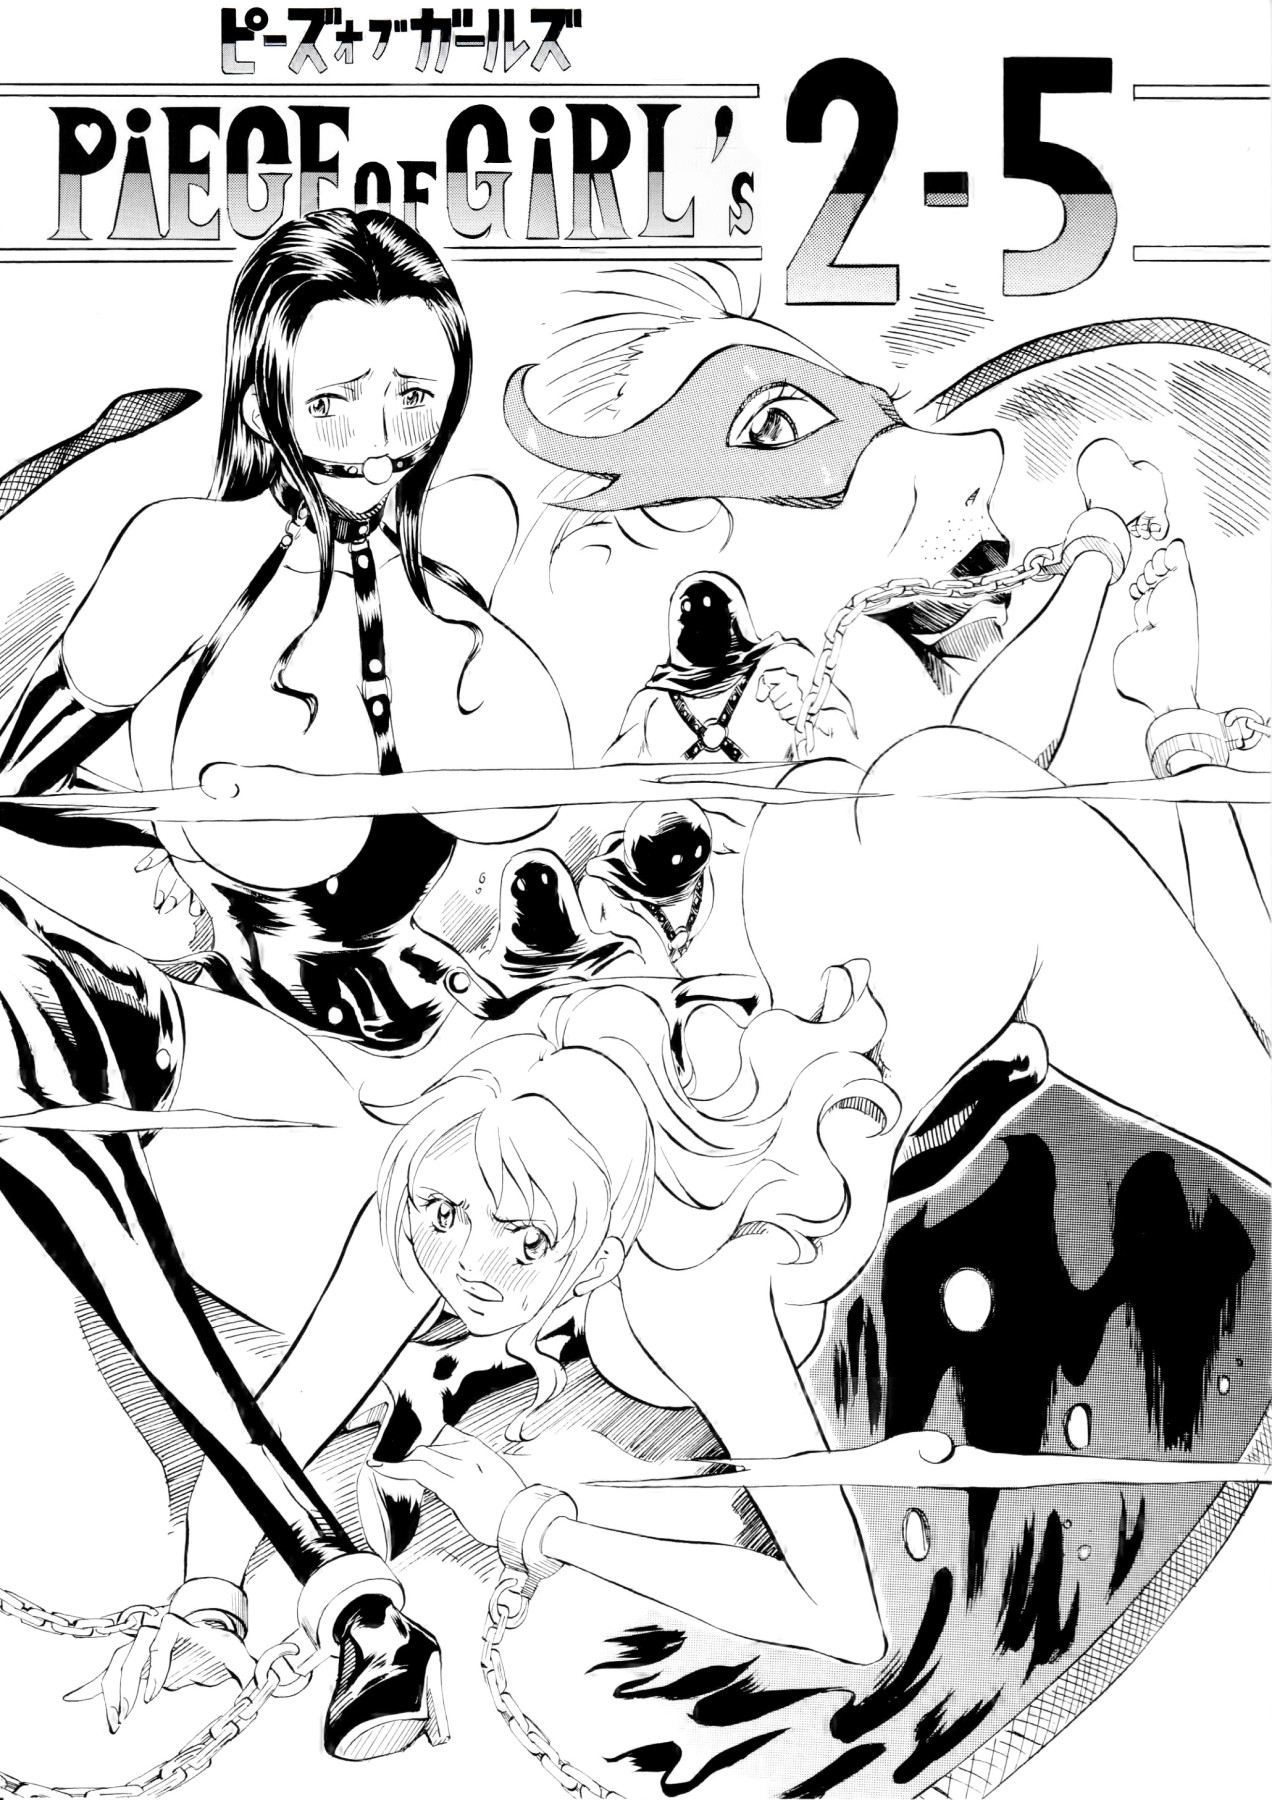 Hentai Manga Comic-v22m-Piece of Girls 2.5-Read-1